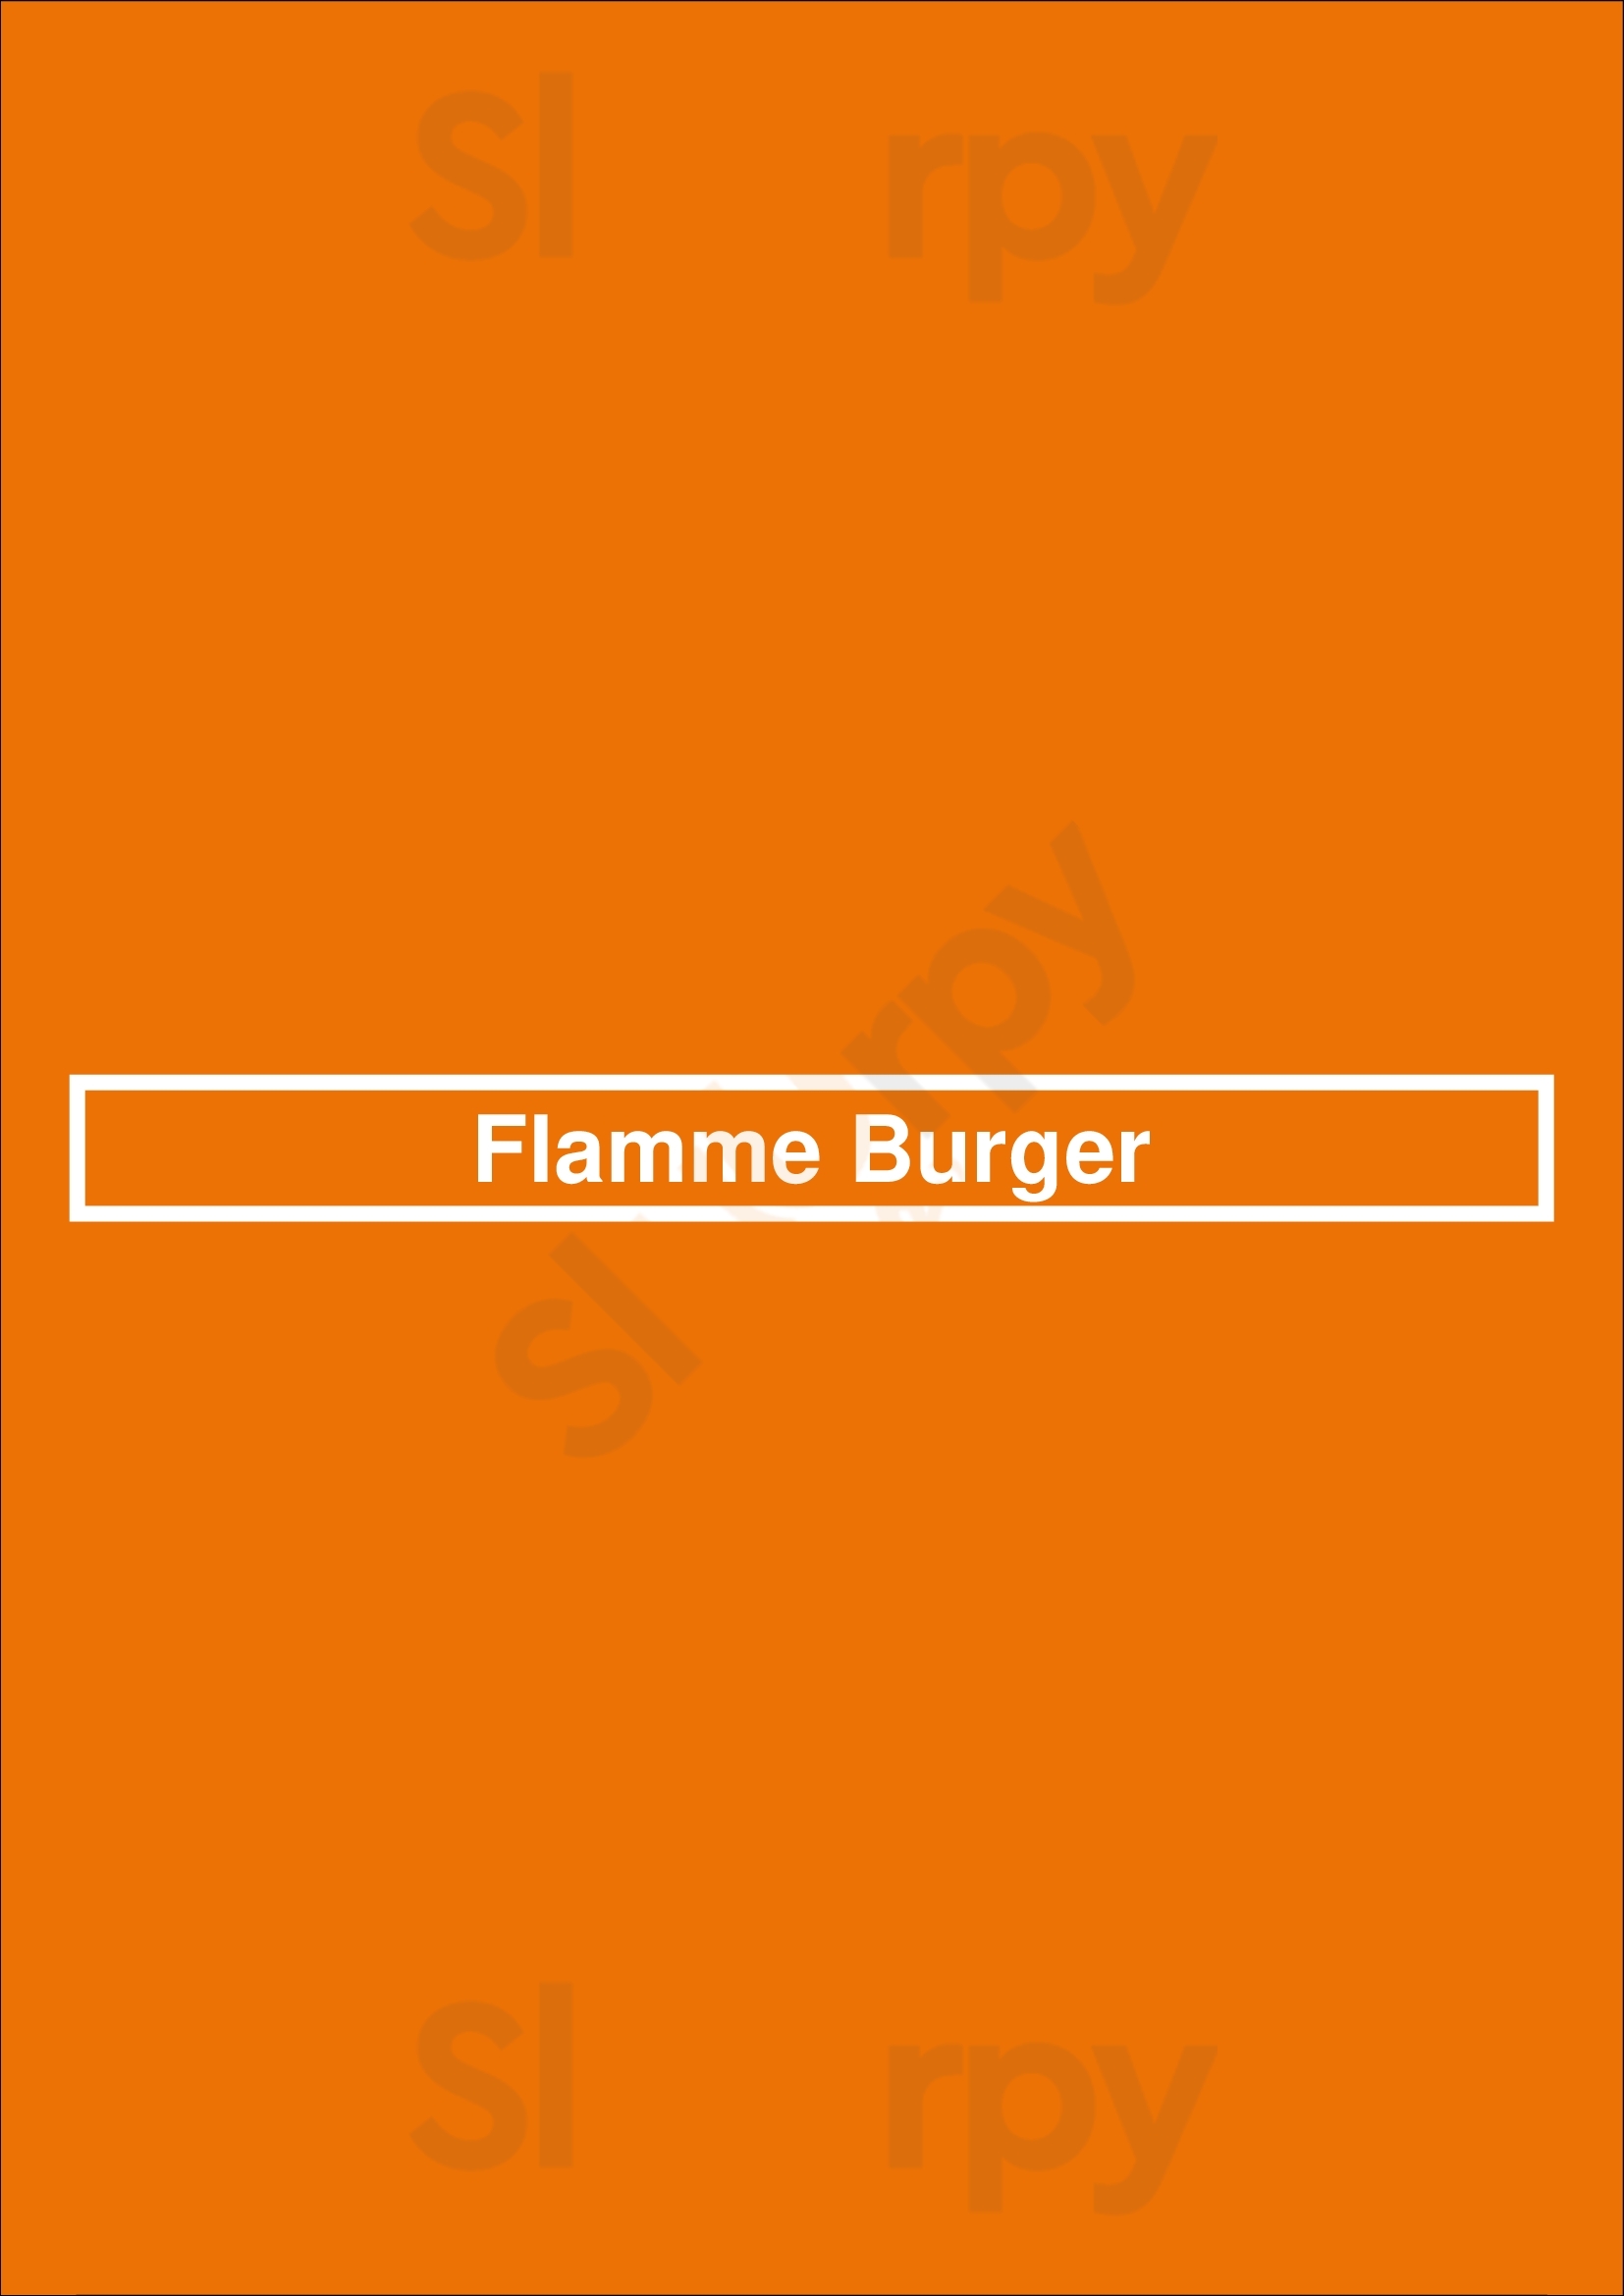 Flamme Burger Keystone Indianapolis Menu - 1